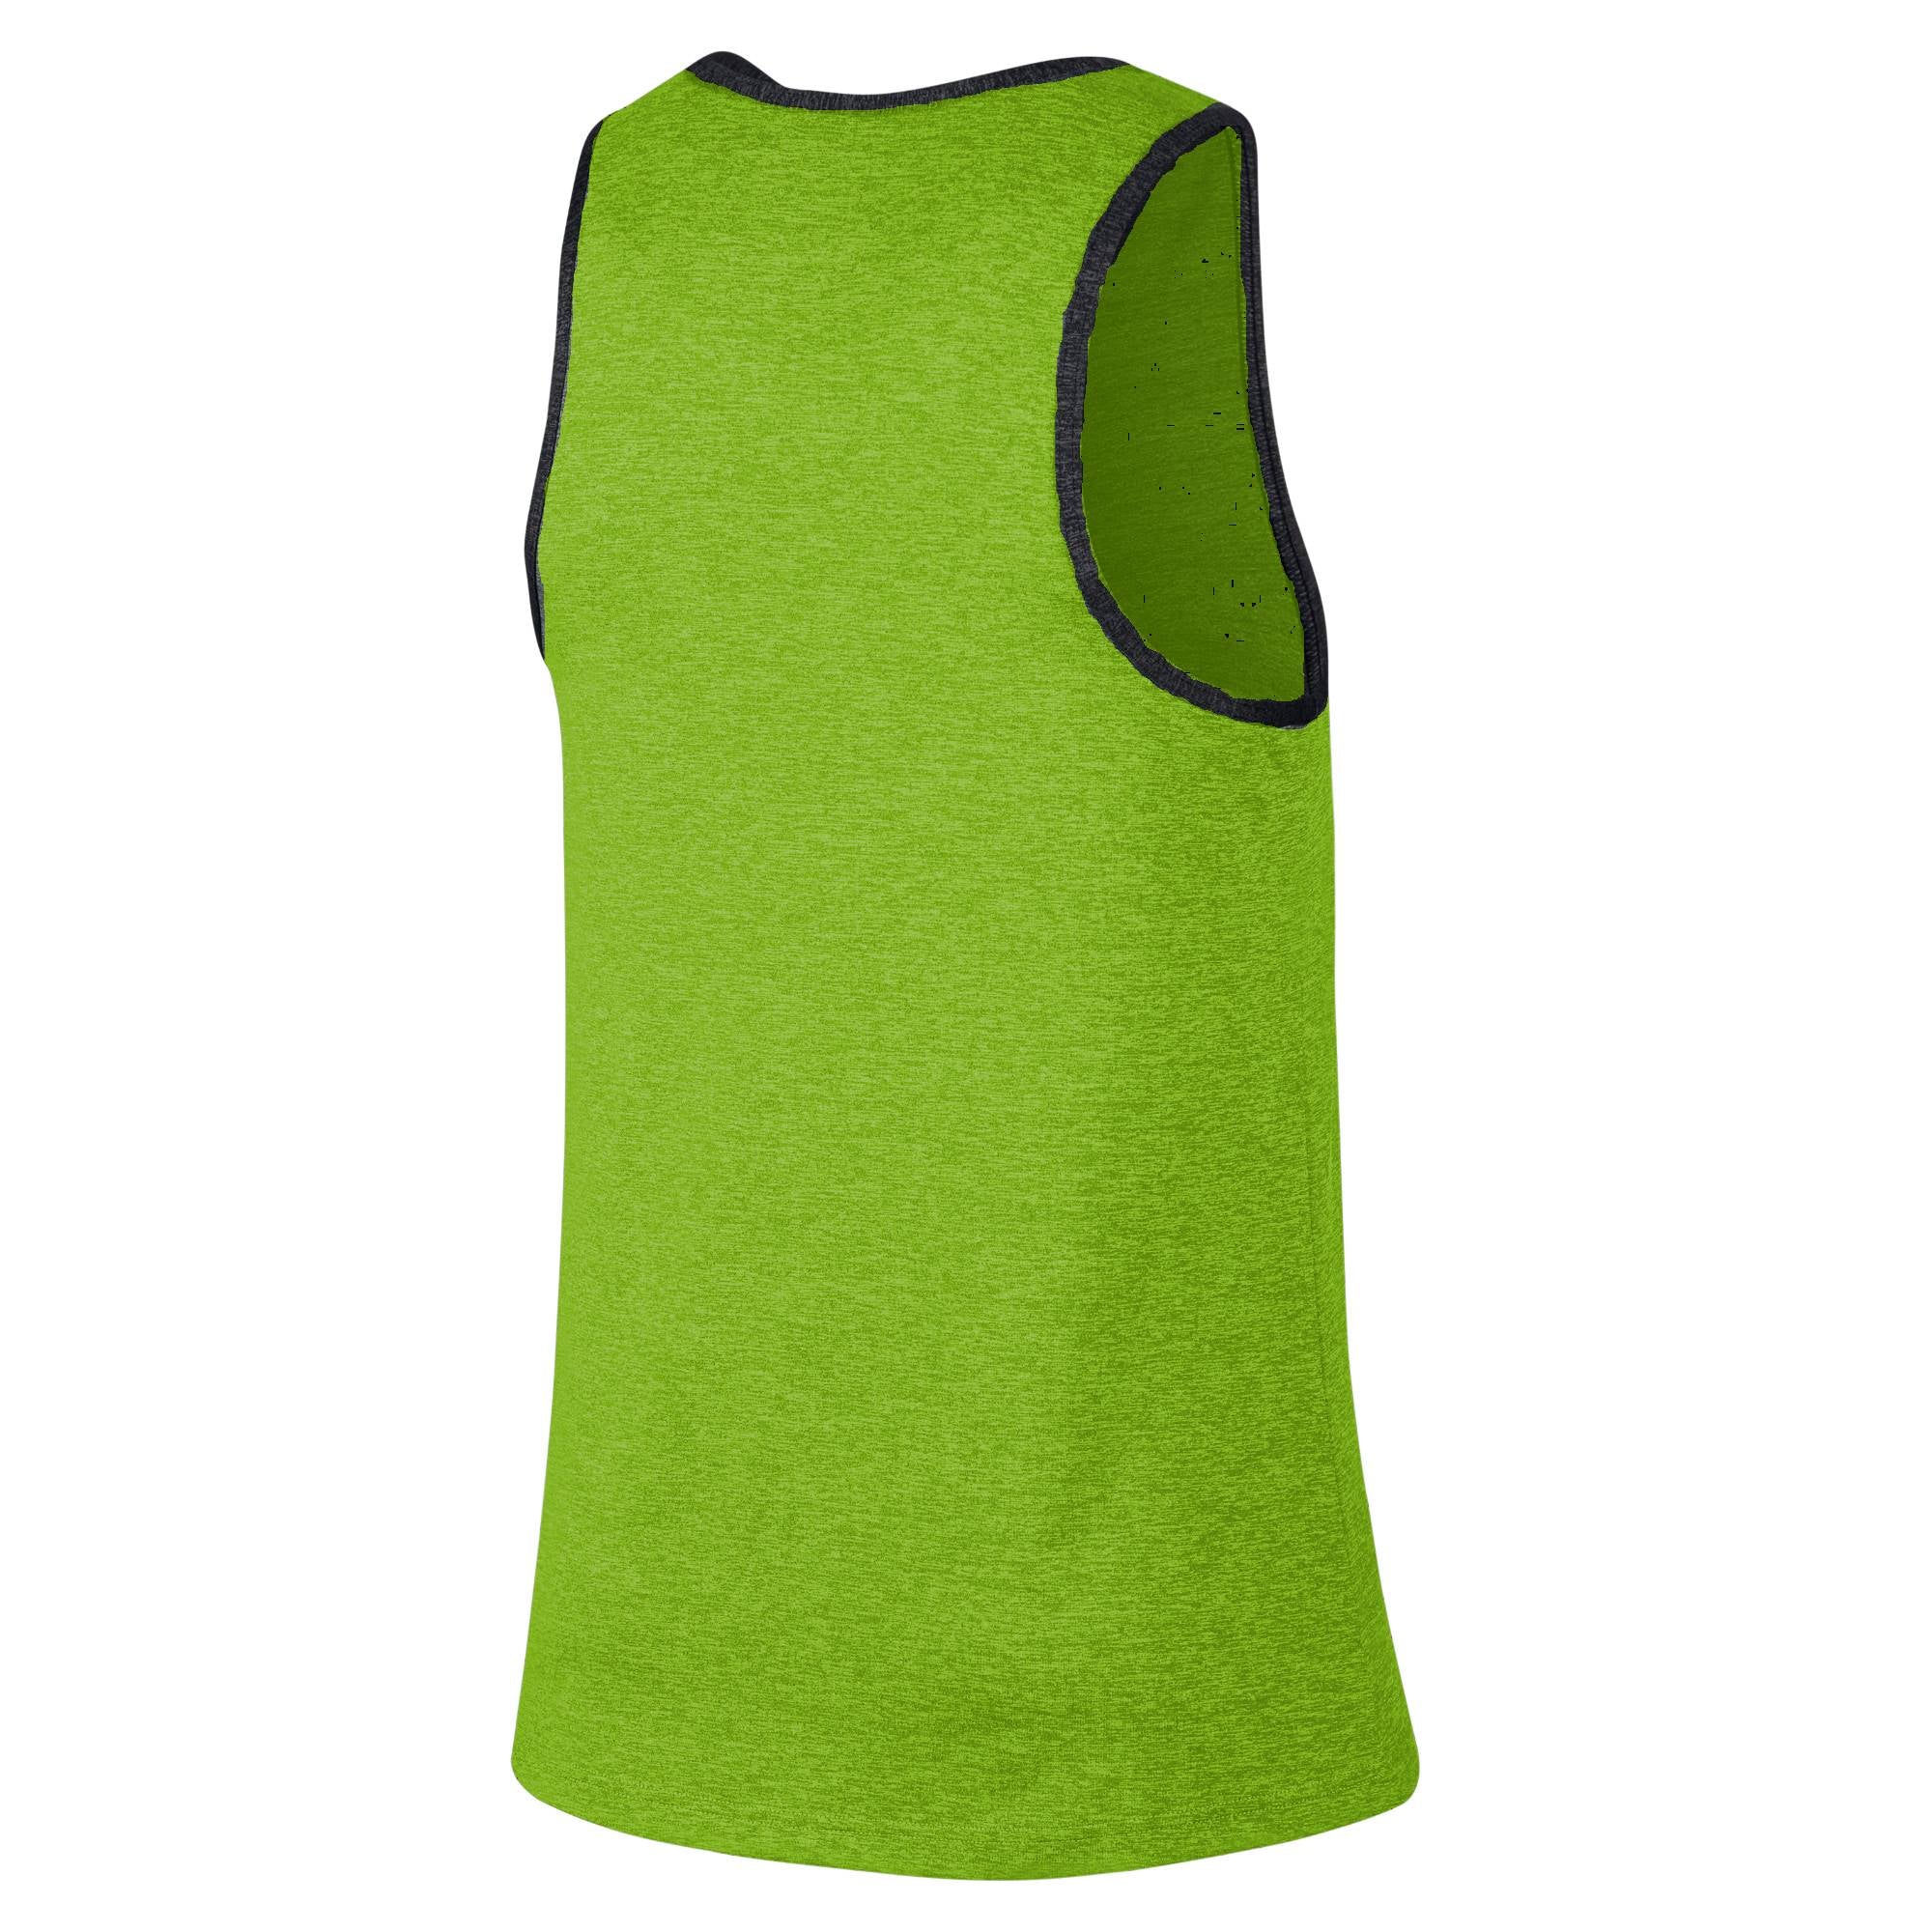 Nike Basketball Hyper Elite Knit Basketball Sleeveless Top - Action Green/Green Spark/Metallic Silver